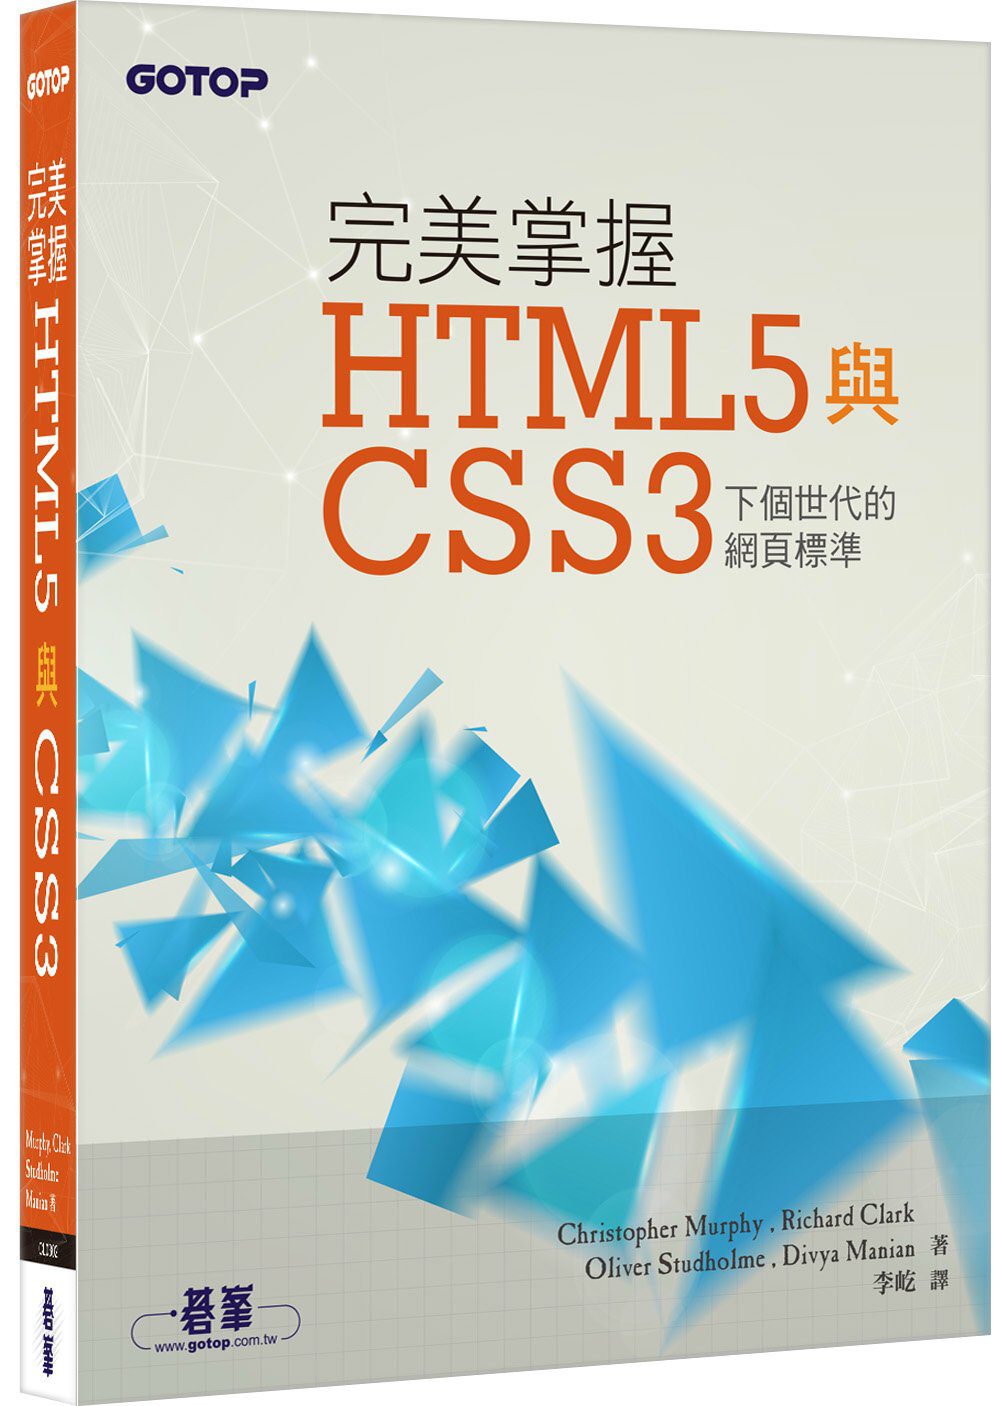 完美掌握HTML5與CSS3